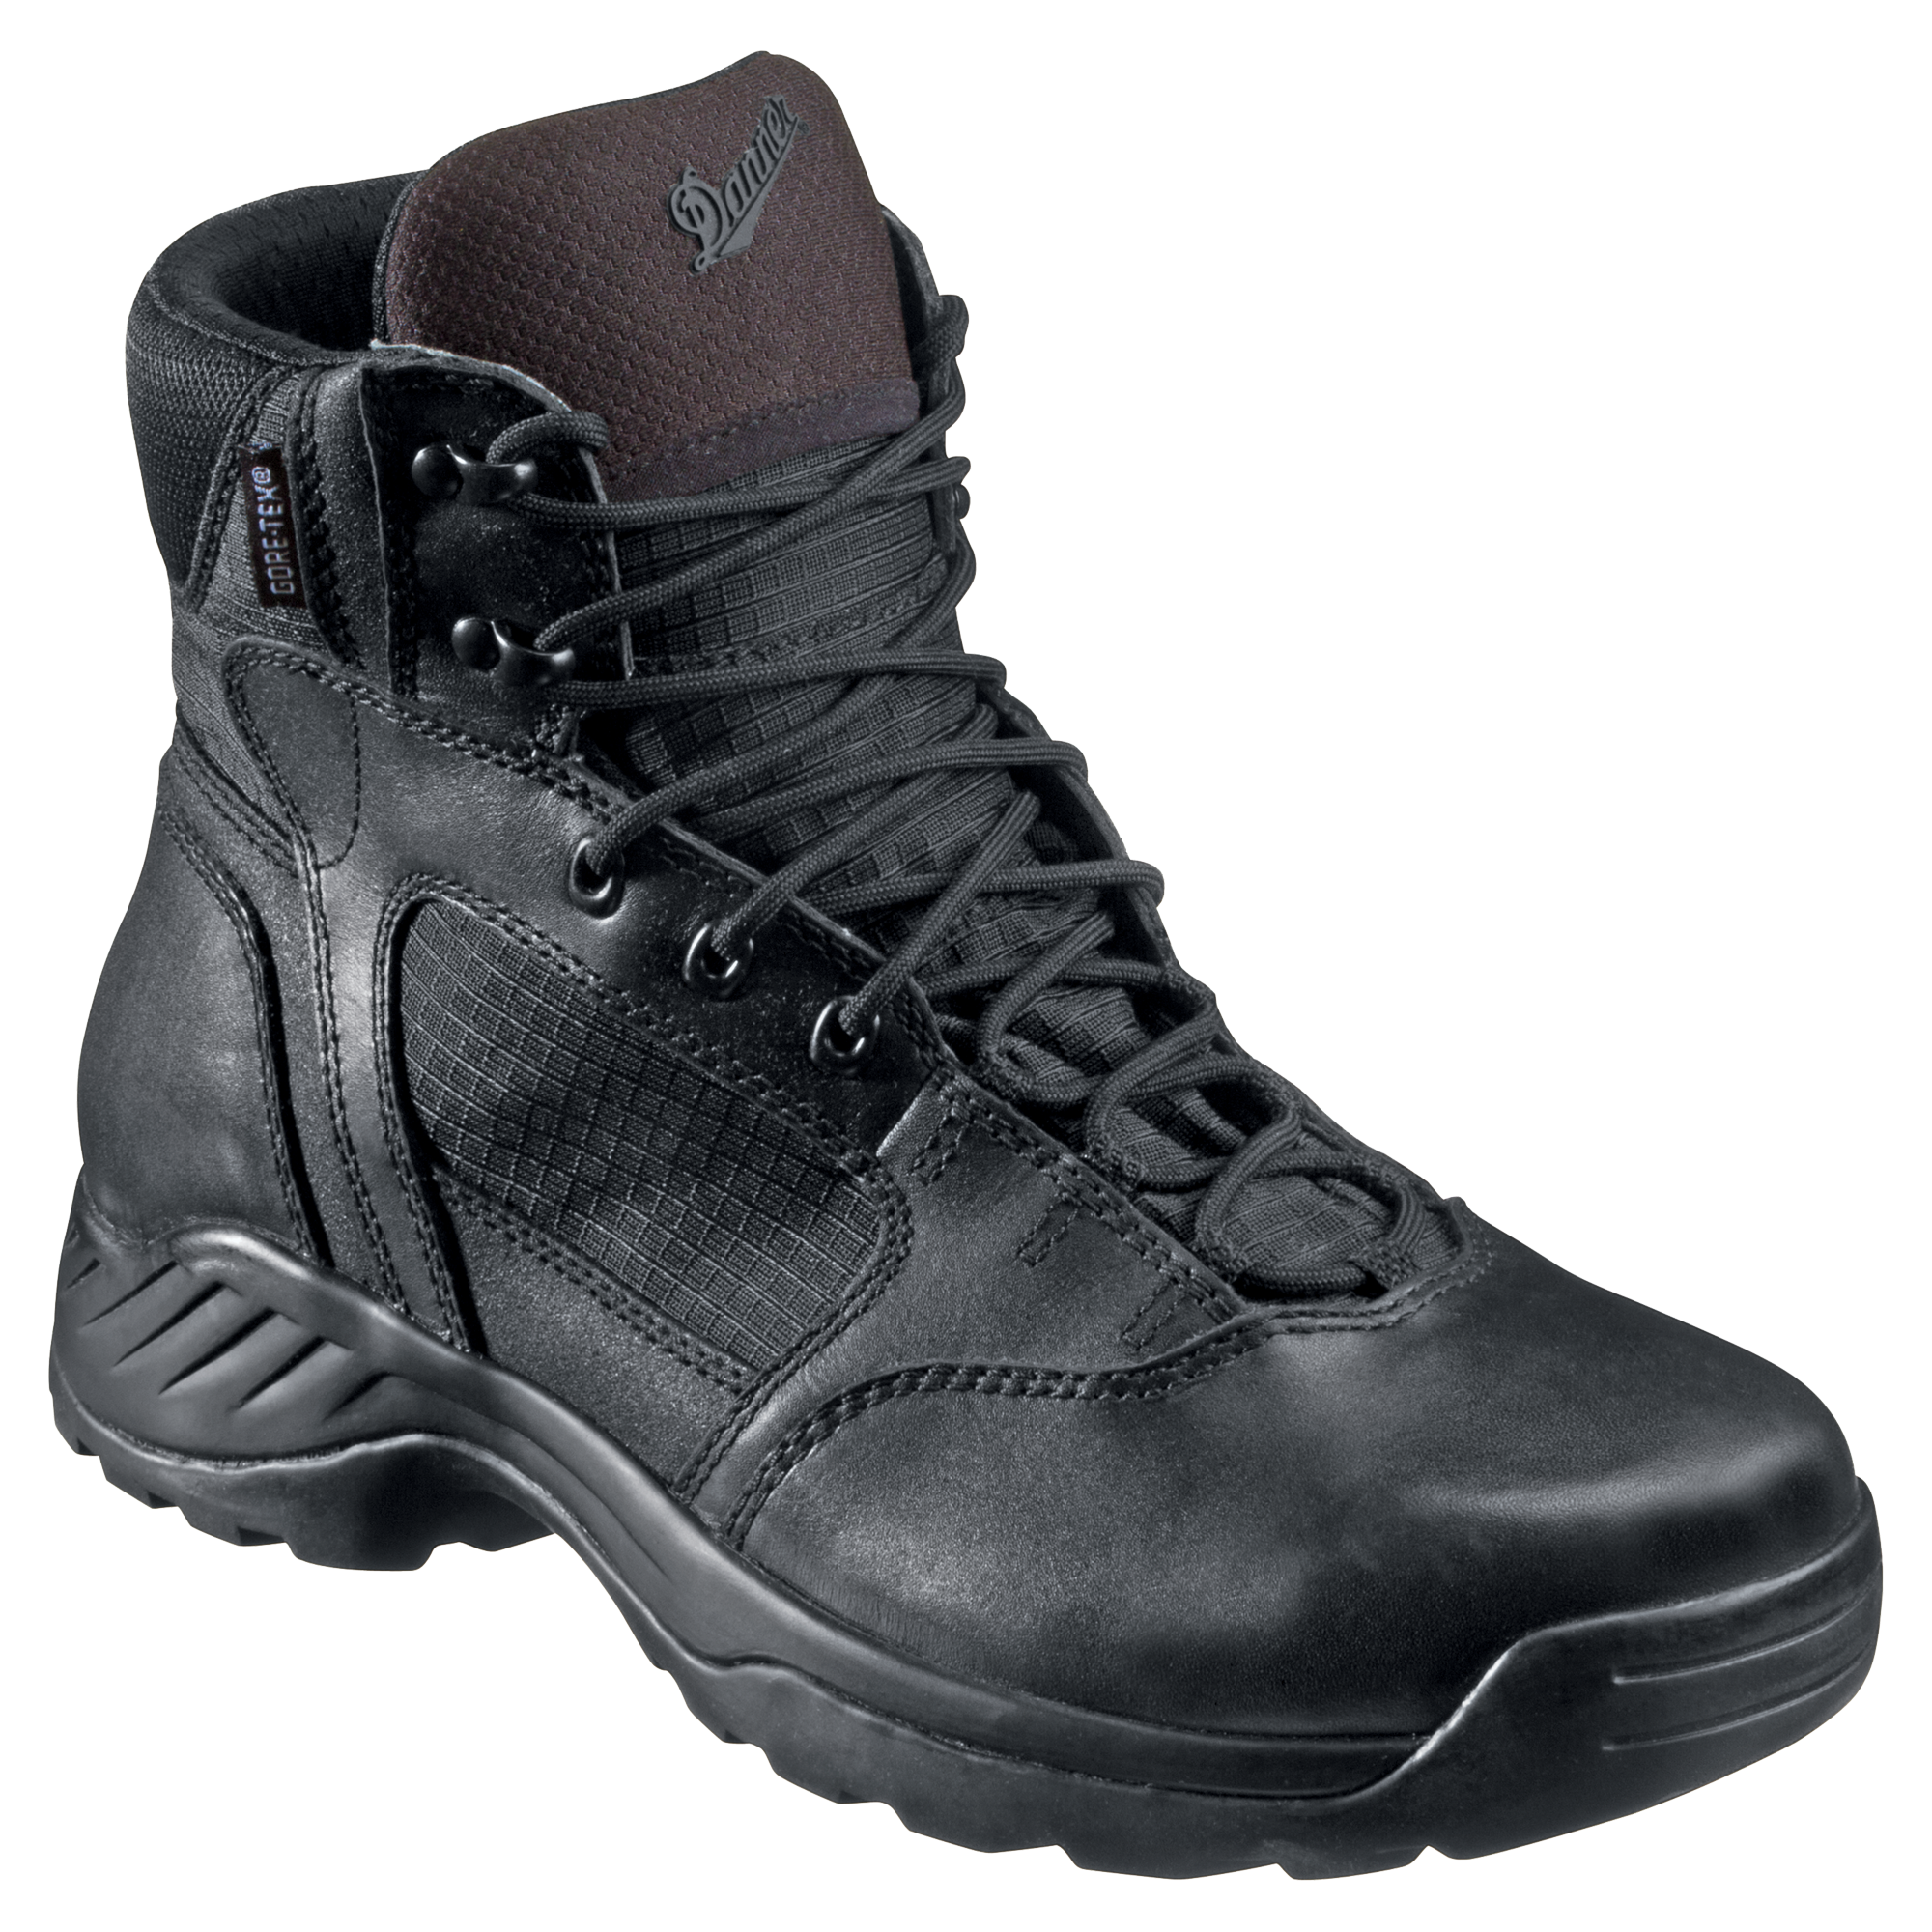 Danner Kinetic GTX 6' Side-Zip Waterproof Tactical Duty Boots for Men - Black - 6M